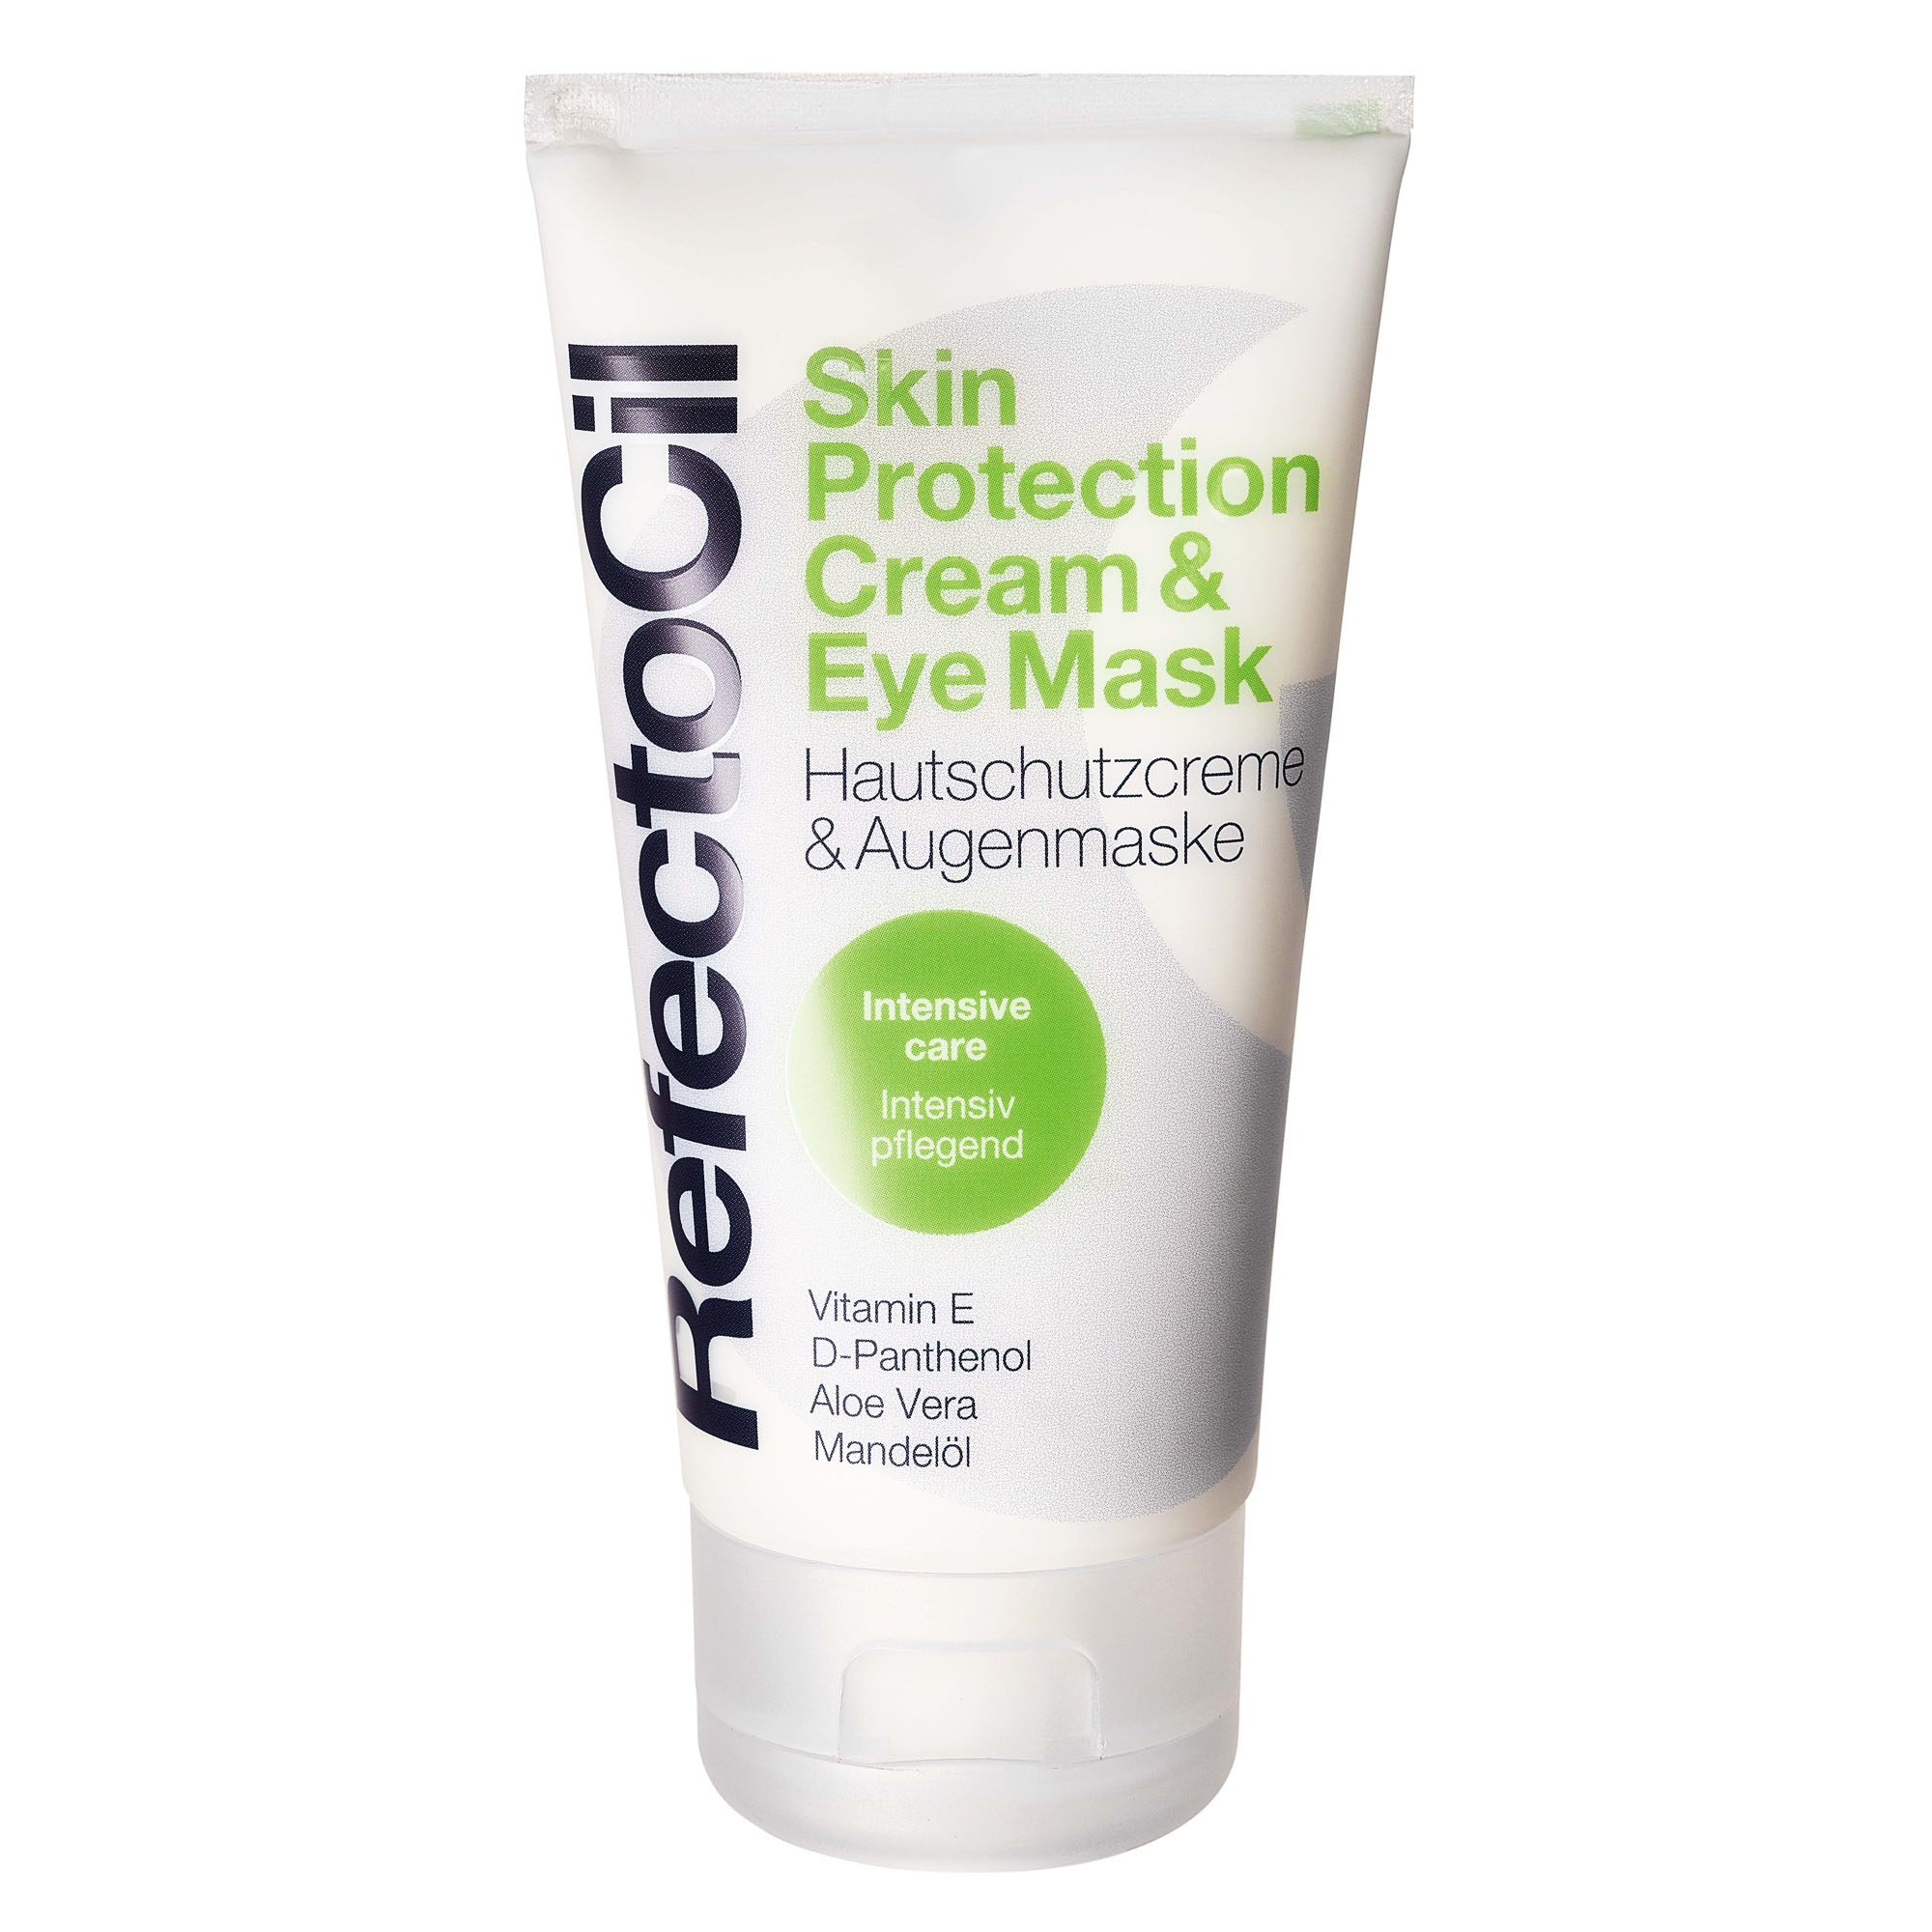 RefectoCil Skin Protection Cream Eye Mask - 75 ml